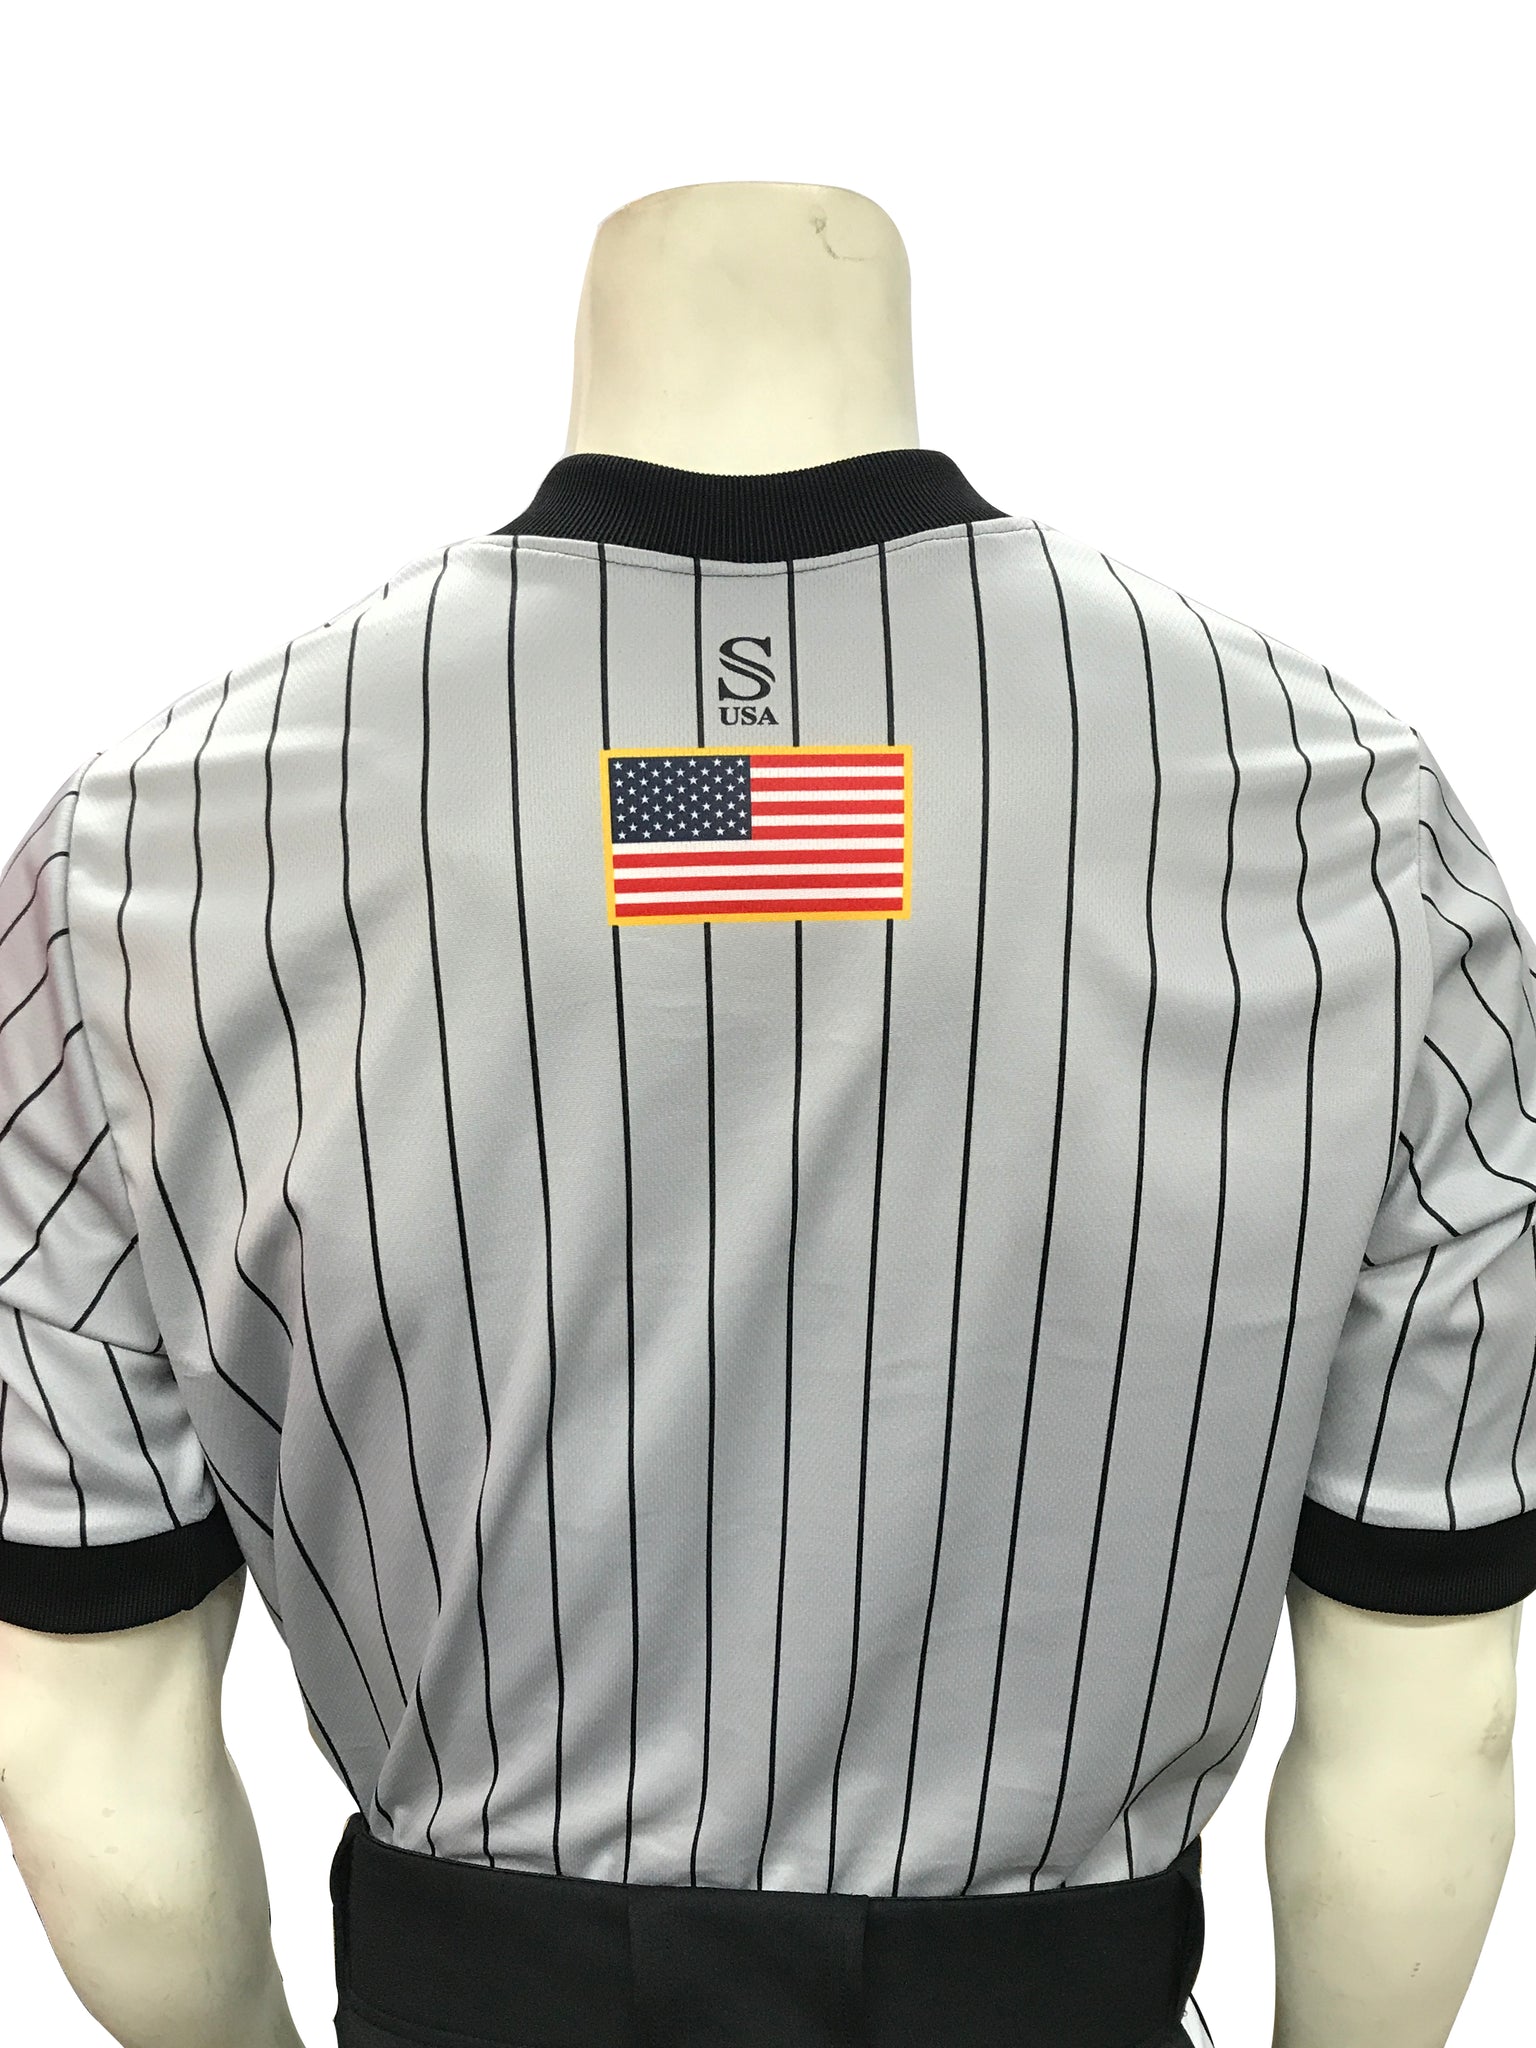 I205-GFBK - Smitty "Made in USA" - GFBK IAABO Grey Basketball Men's Short Sleeve Shirt